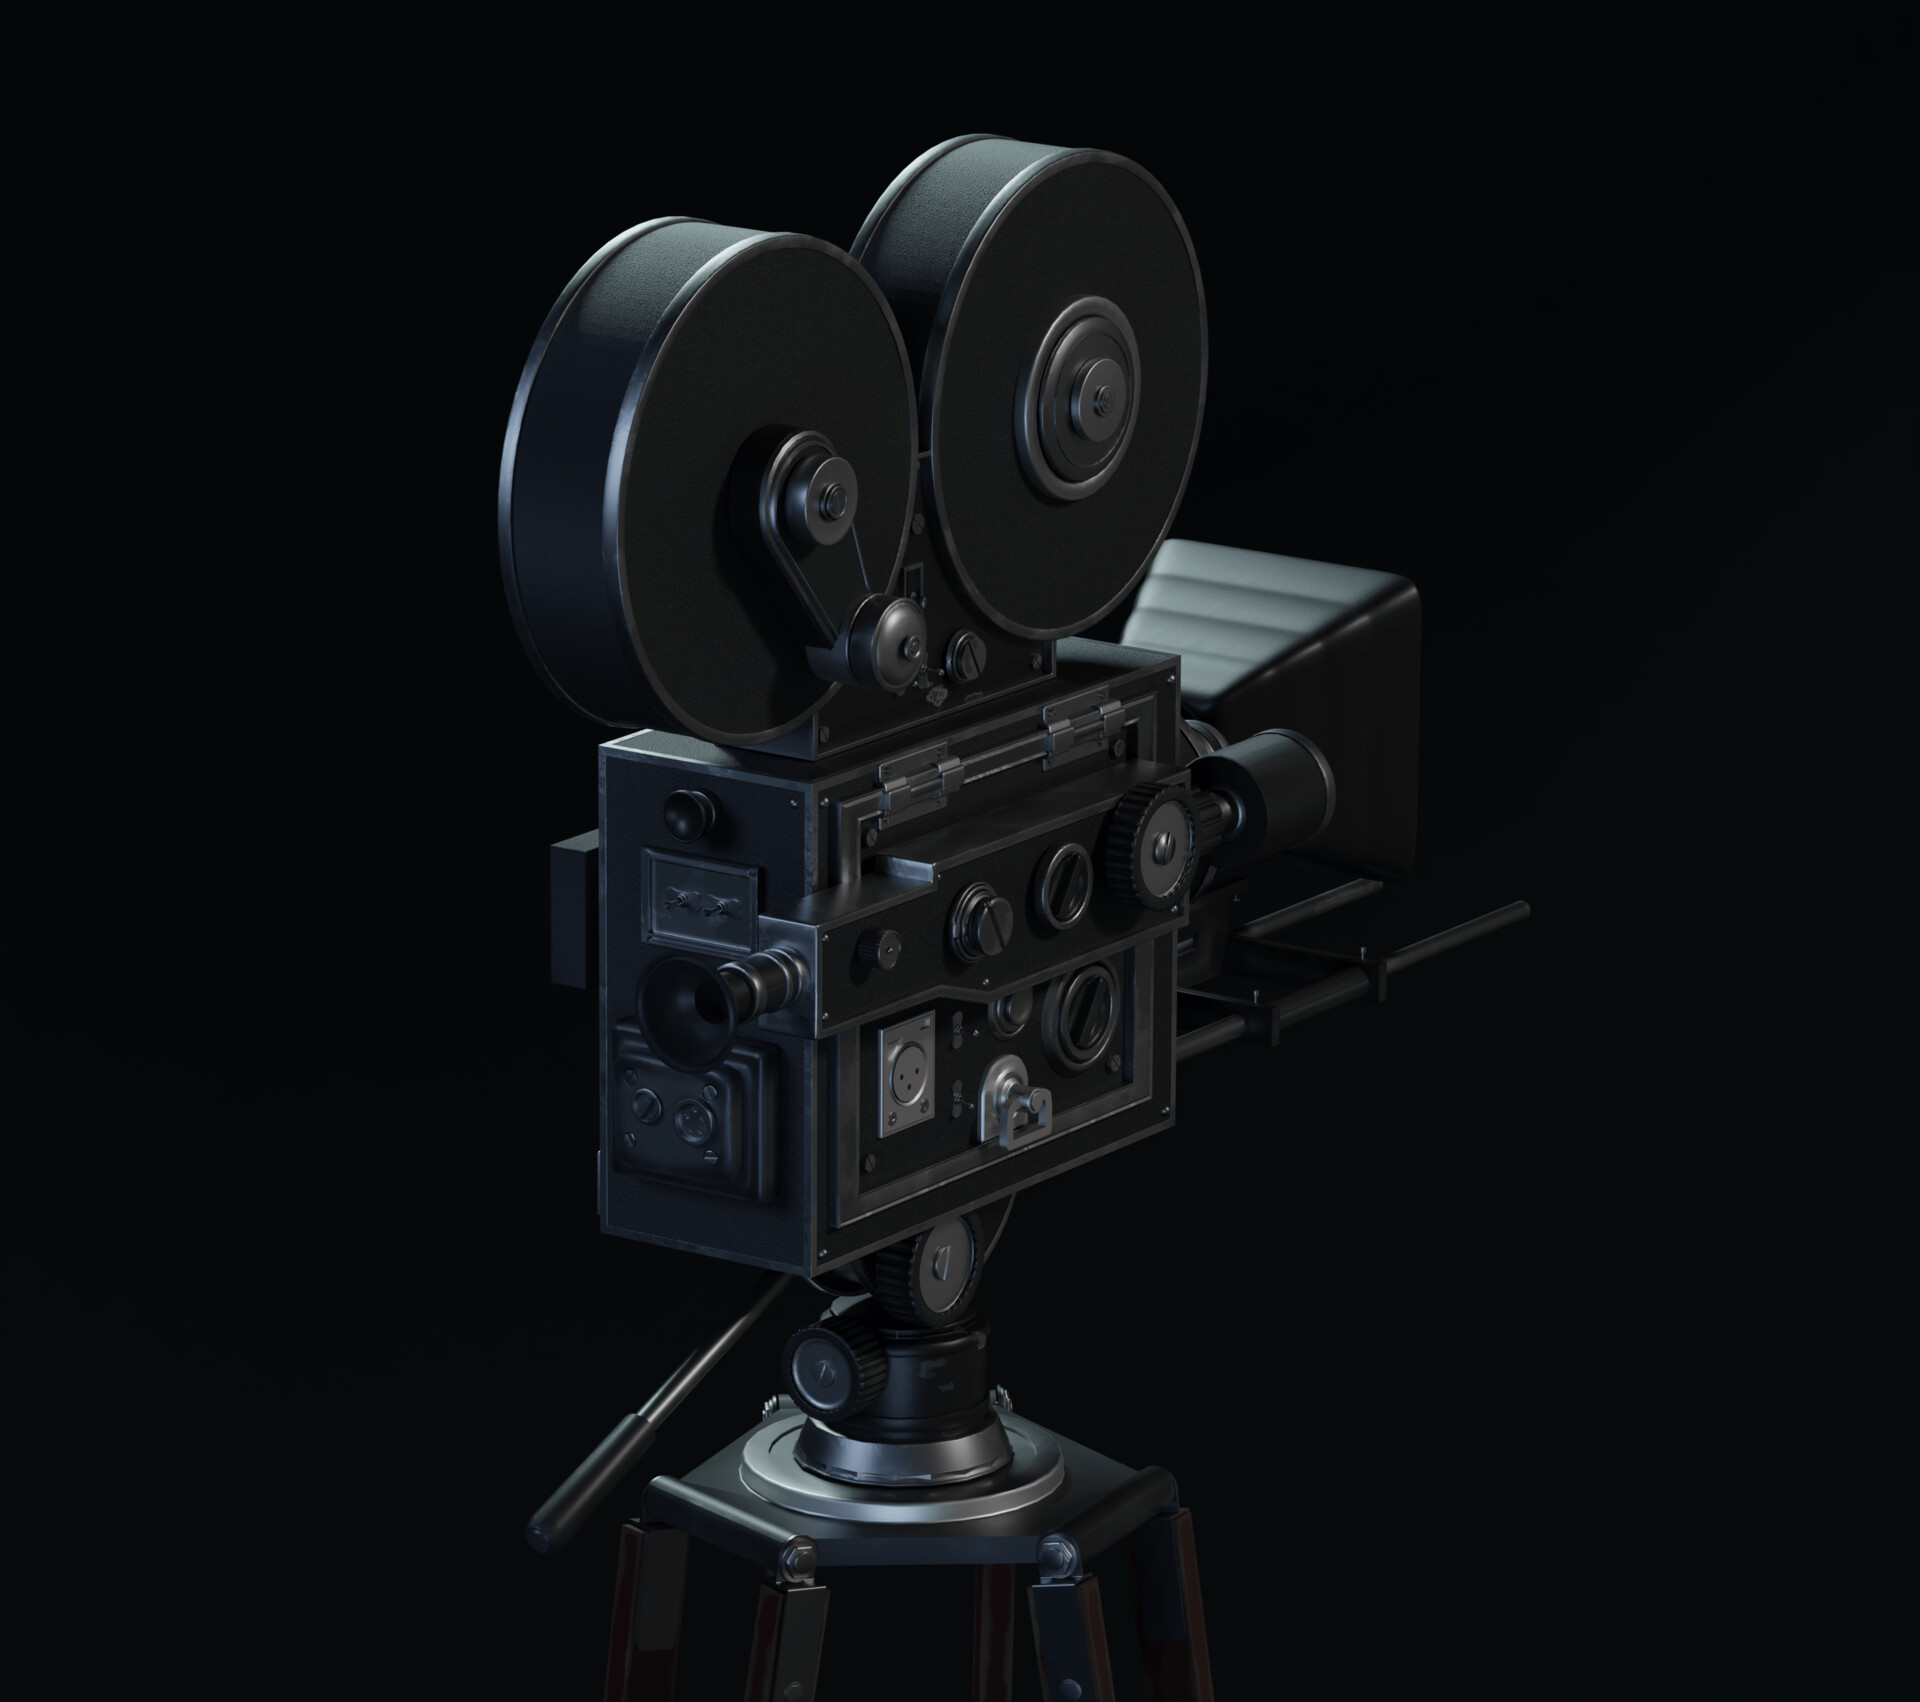 Retro Mechanical Movie Camera and Reel Film Stock Image - Image of lens,  mechanical: 73022751